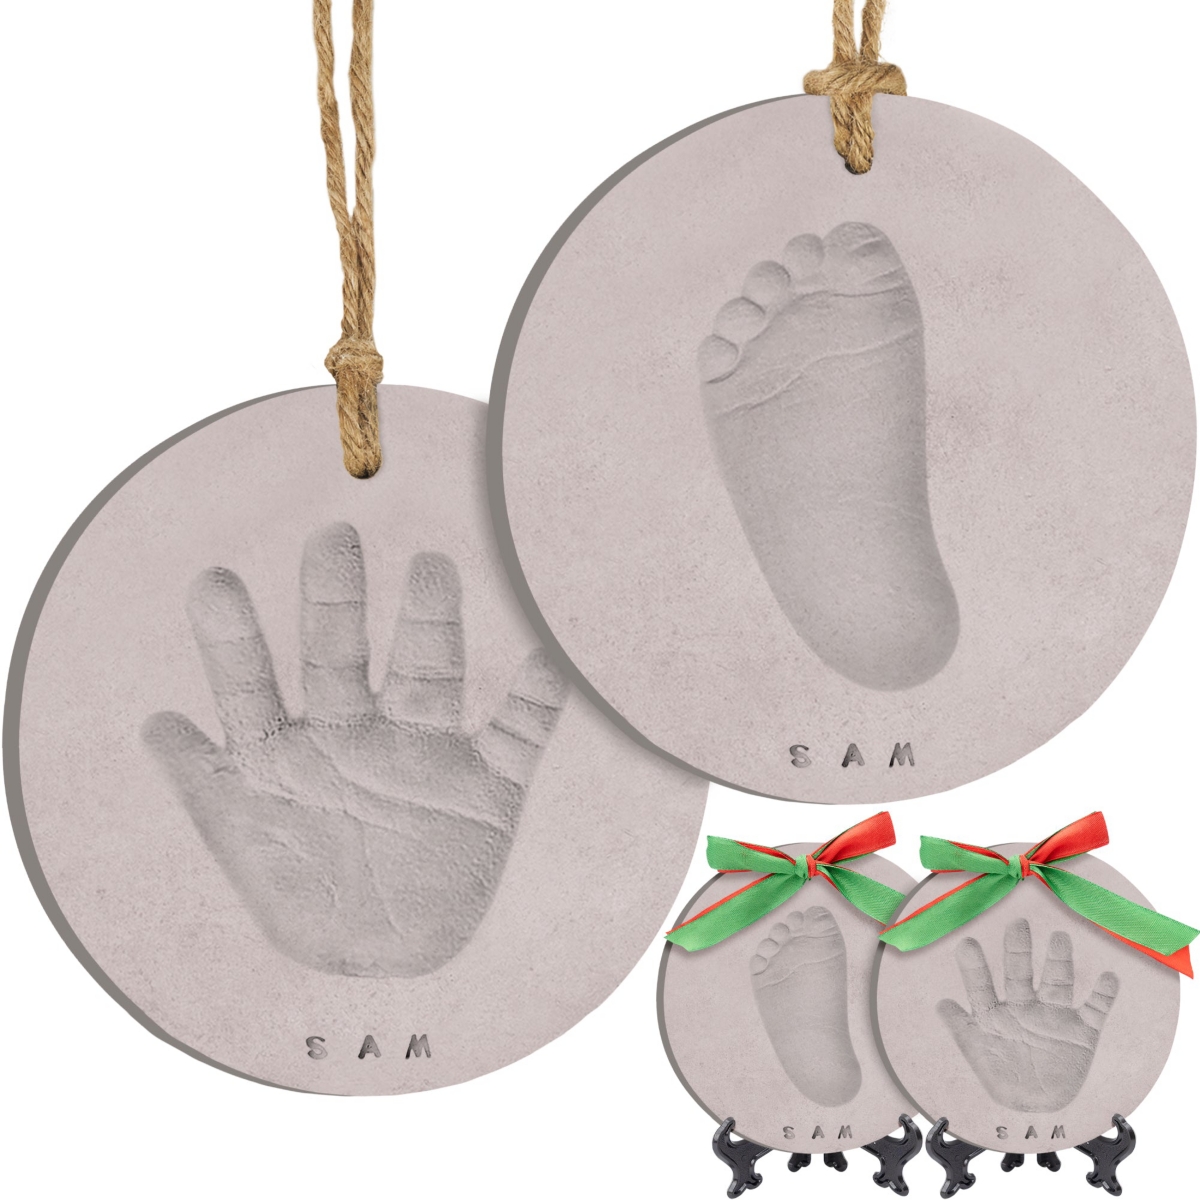 Keababies Cherish Baby Hand And Footprint Kit, Dog Paw Print Kit, Baby Handprint Ornament Kit For Newborn, Bab In Dove